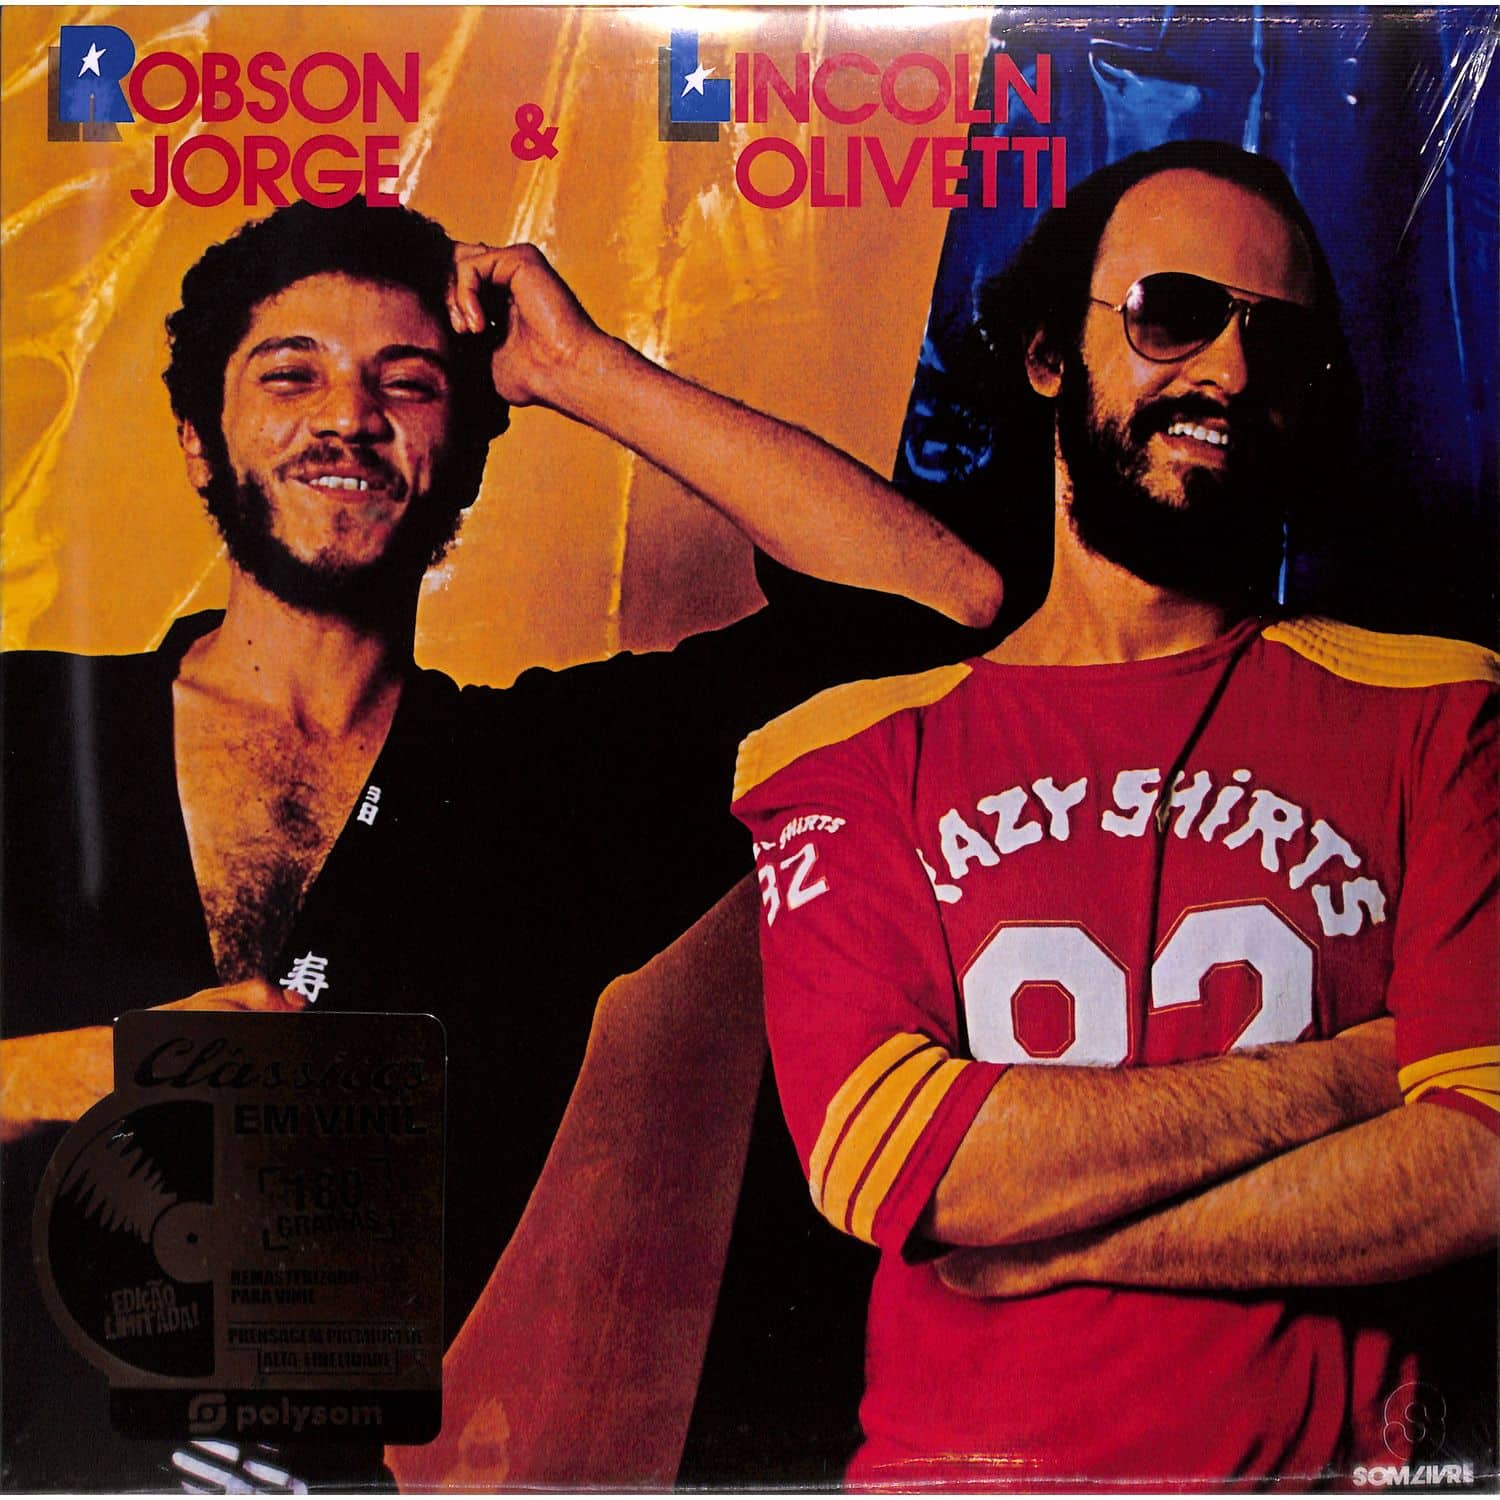 Lincoln Olivetti & Robson Jorge - ROBSON JORGE & LINCOLN OLIVETTI 